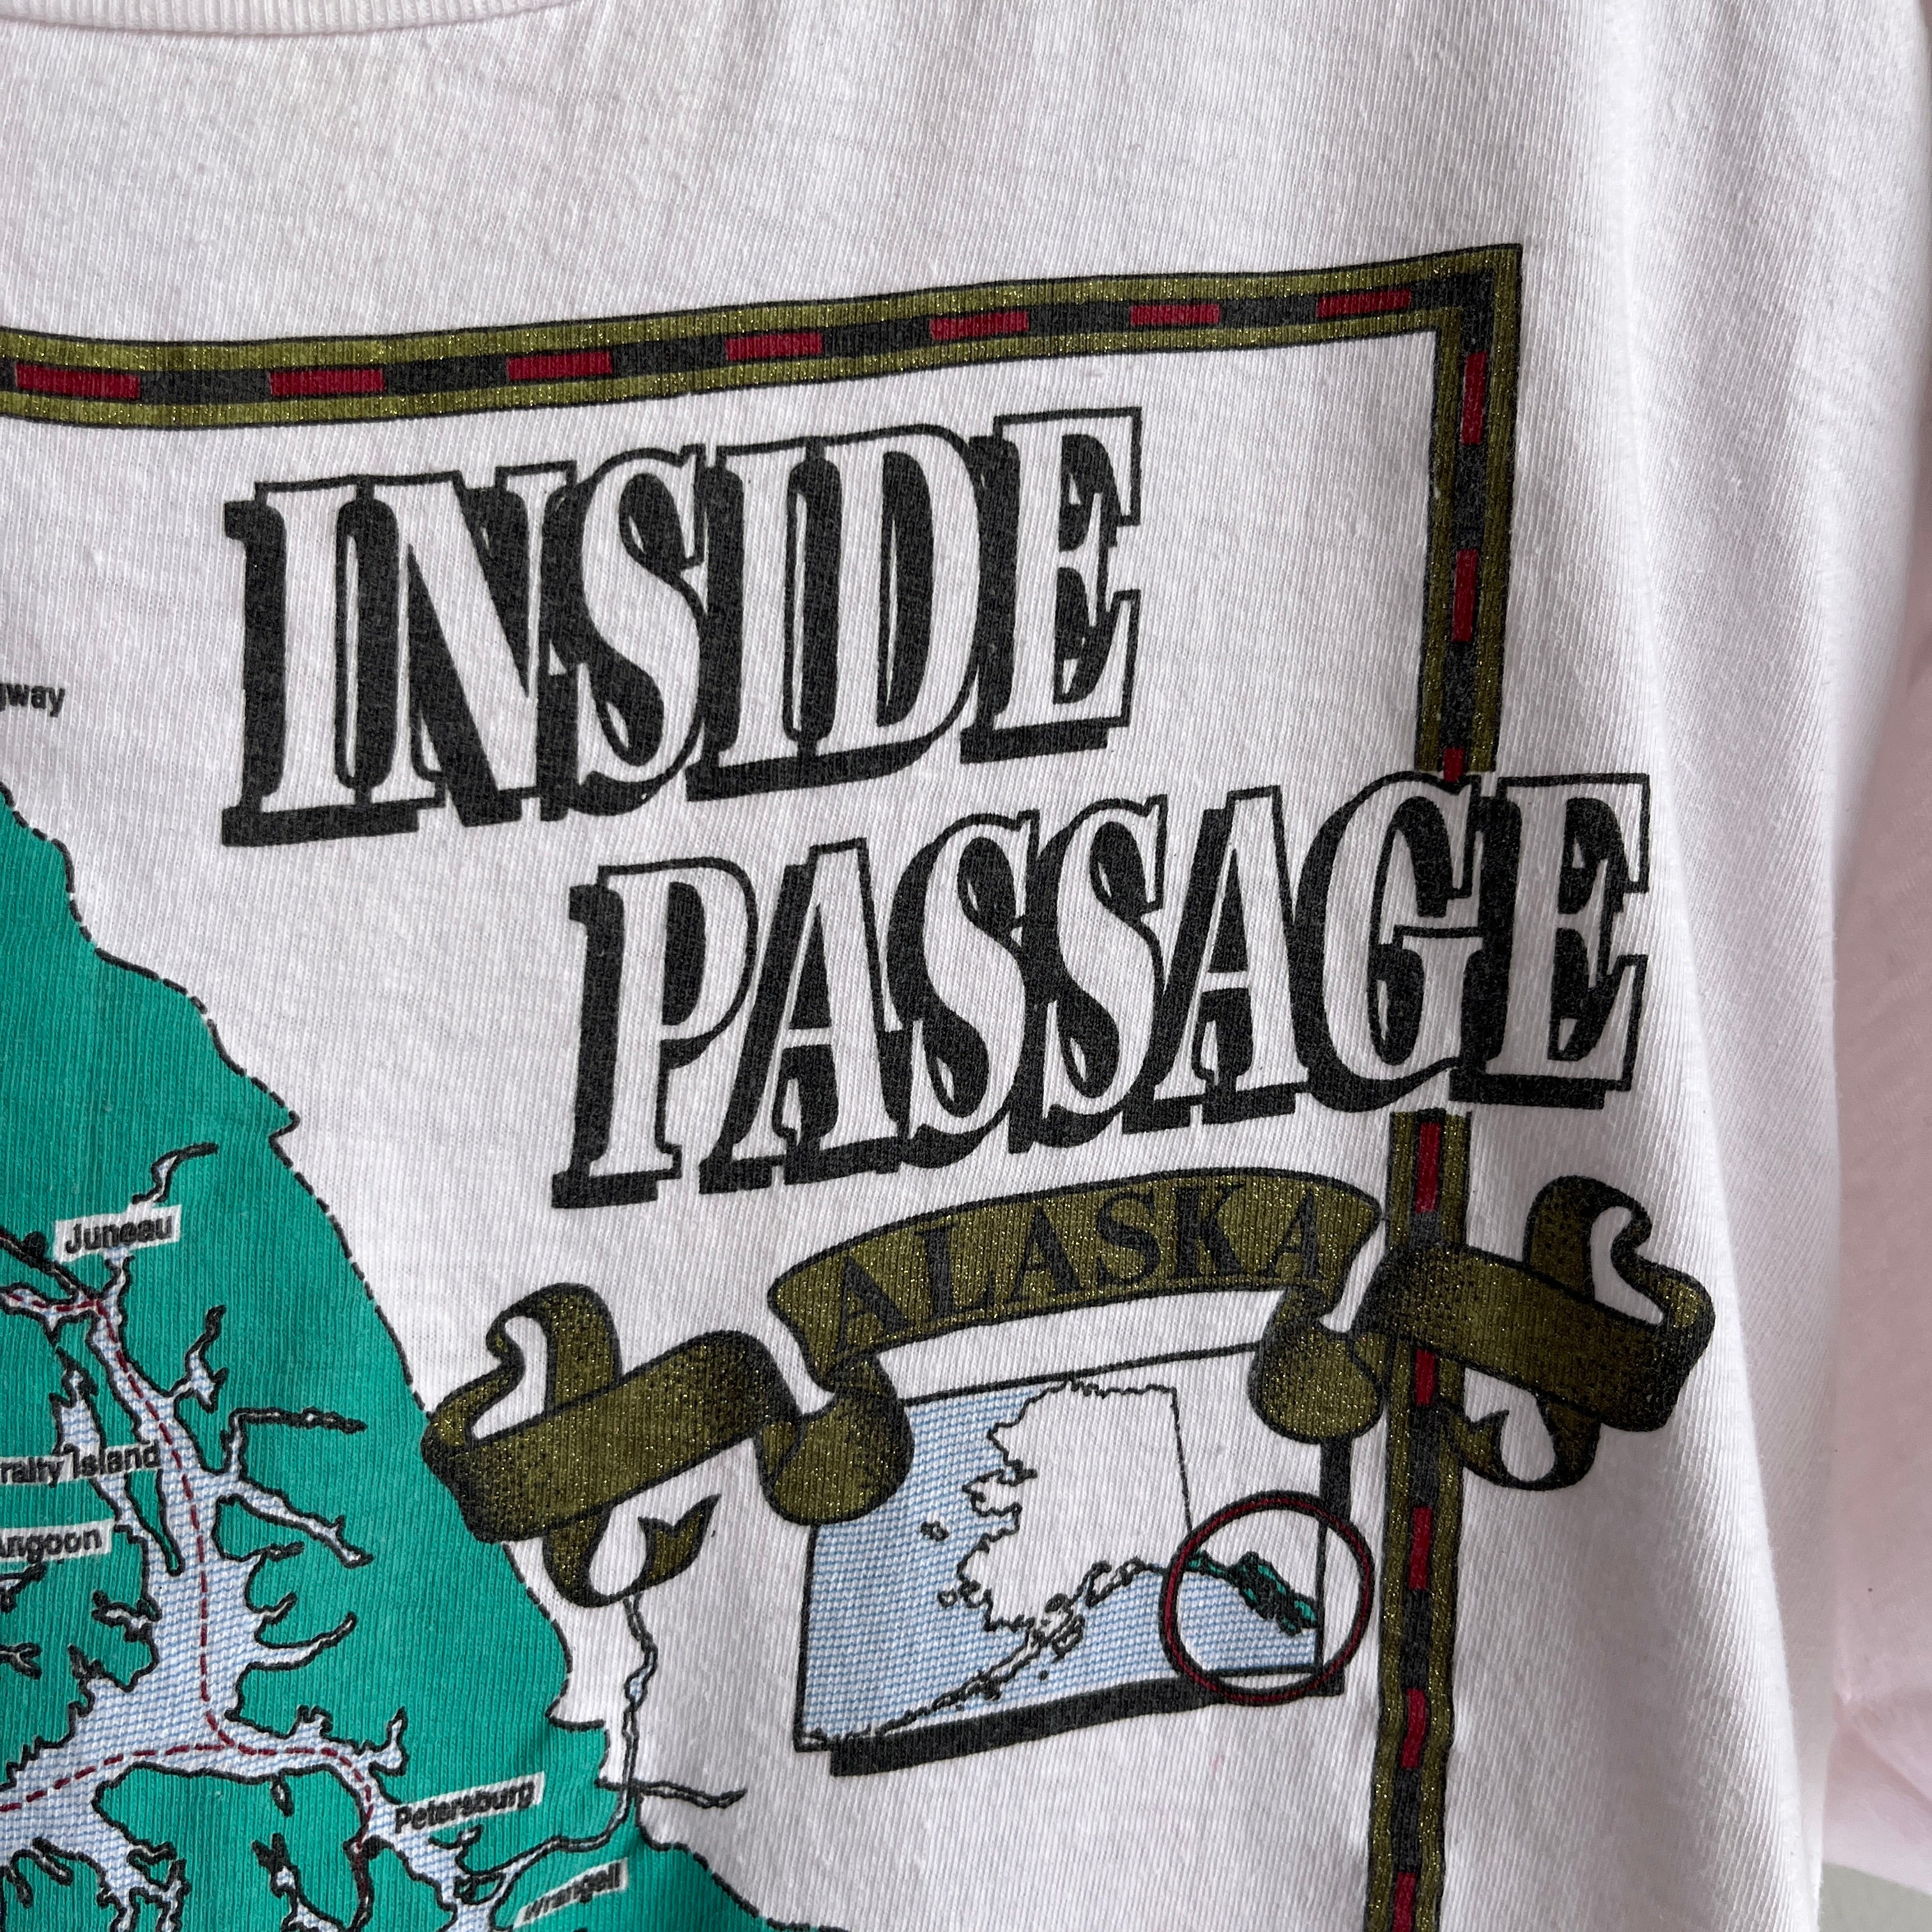 1980/90s Inside Passage Alaska Cotton Tourist T-Shirt